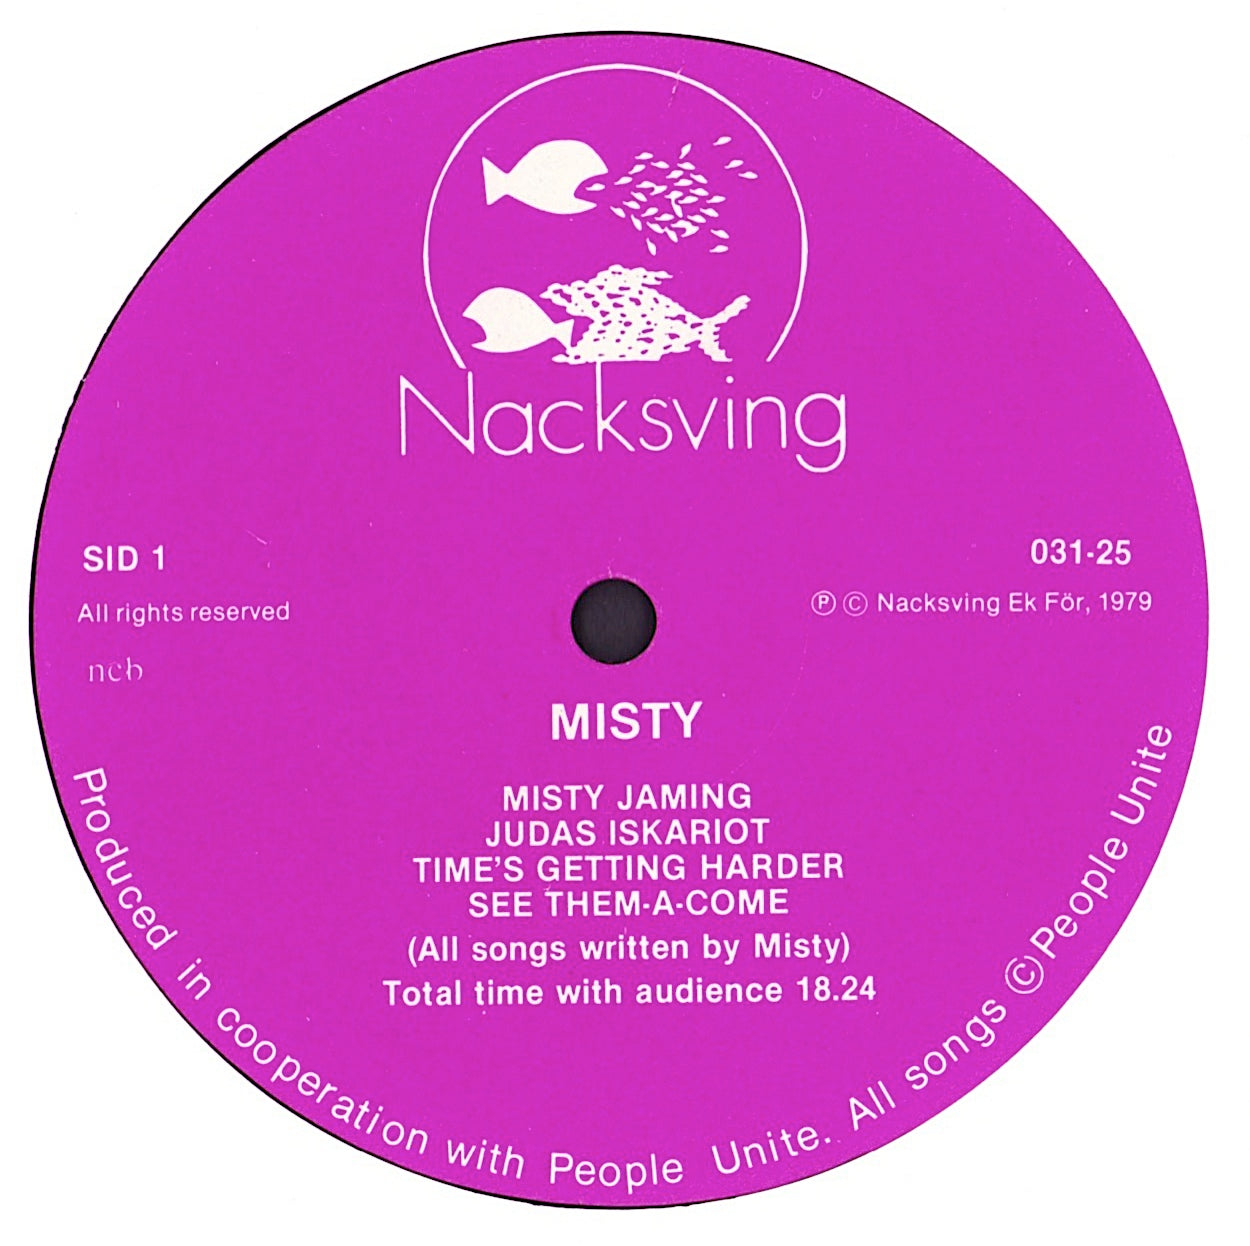 Misty - Misty Over Sweden Vinyl LP